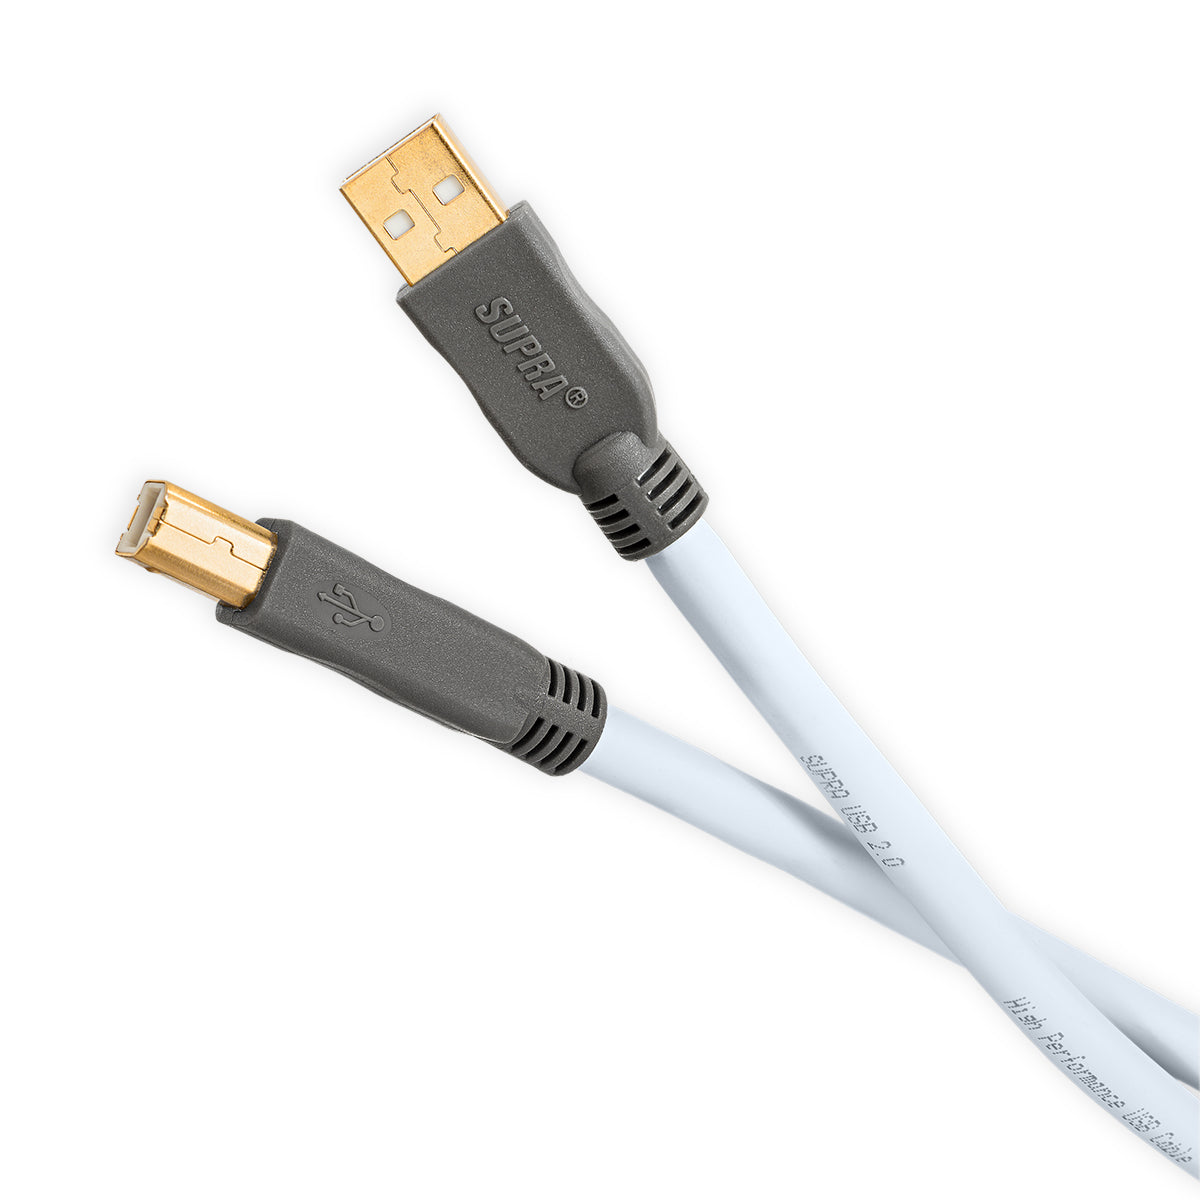 Supra USB 2.0 A-B Cable